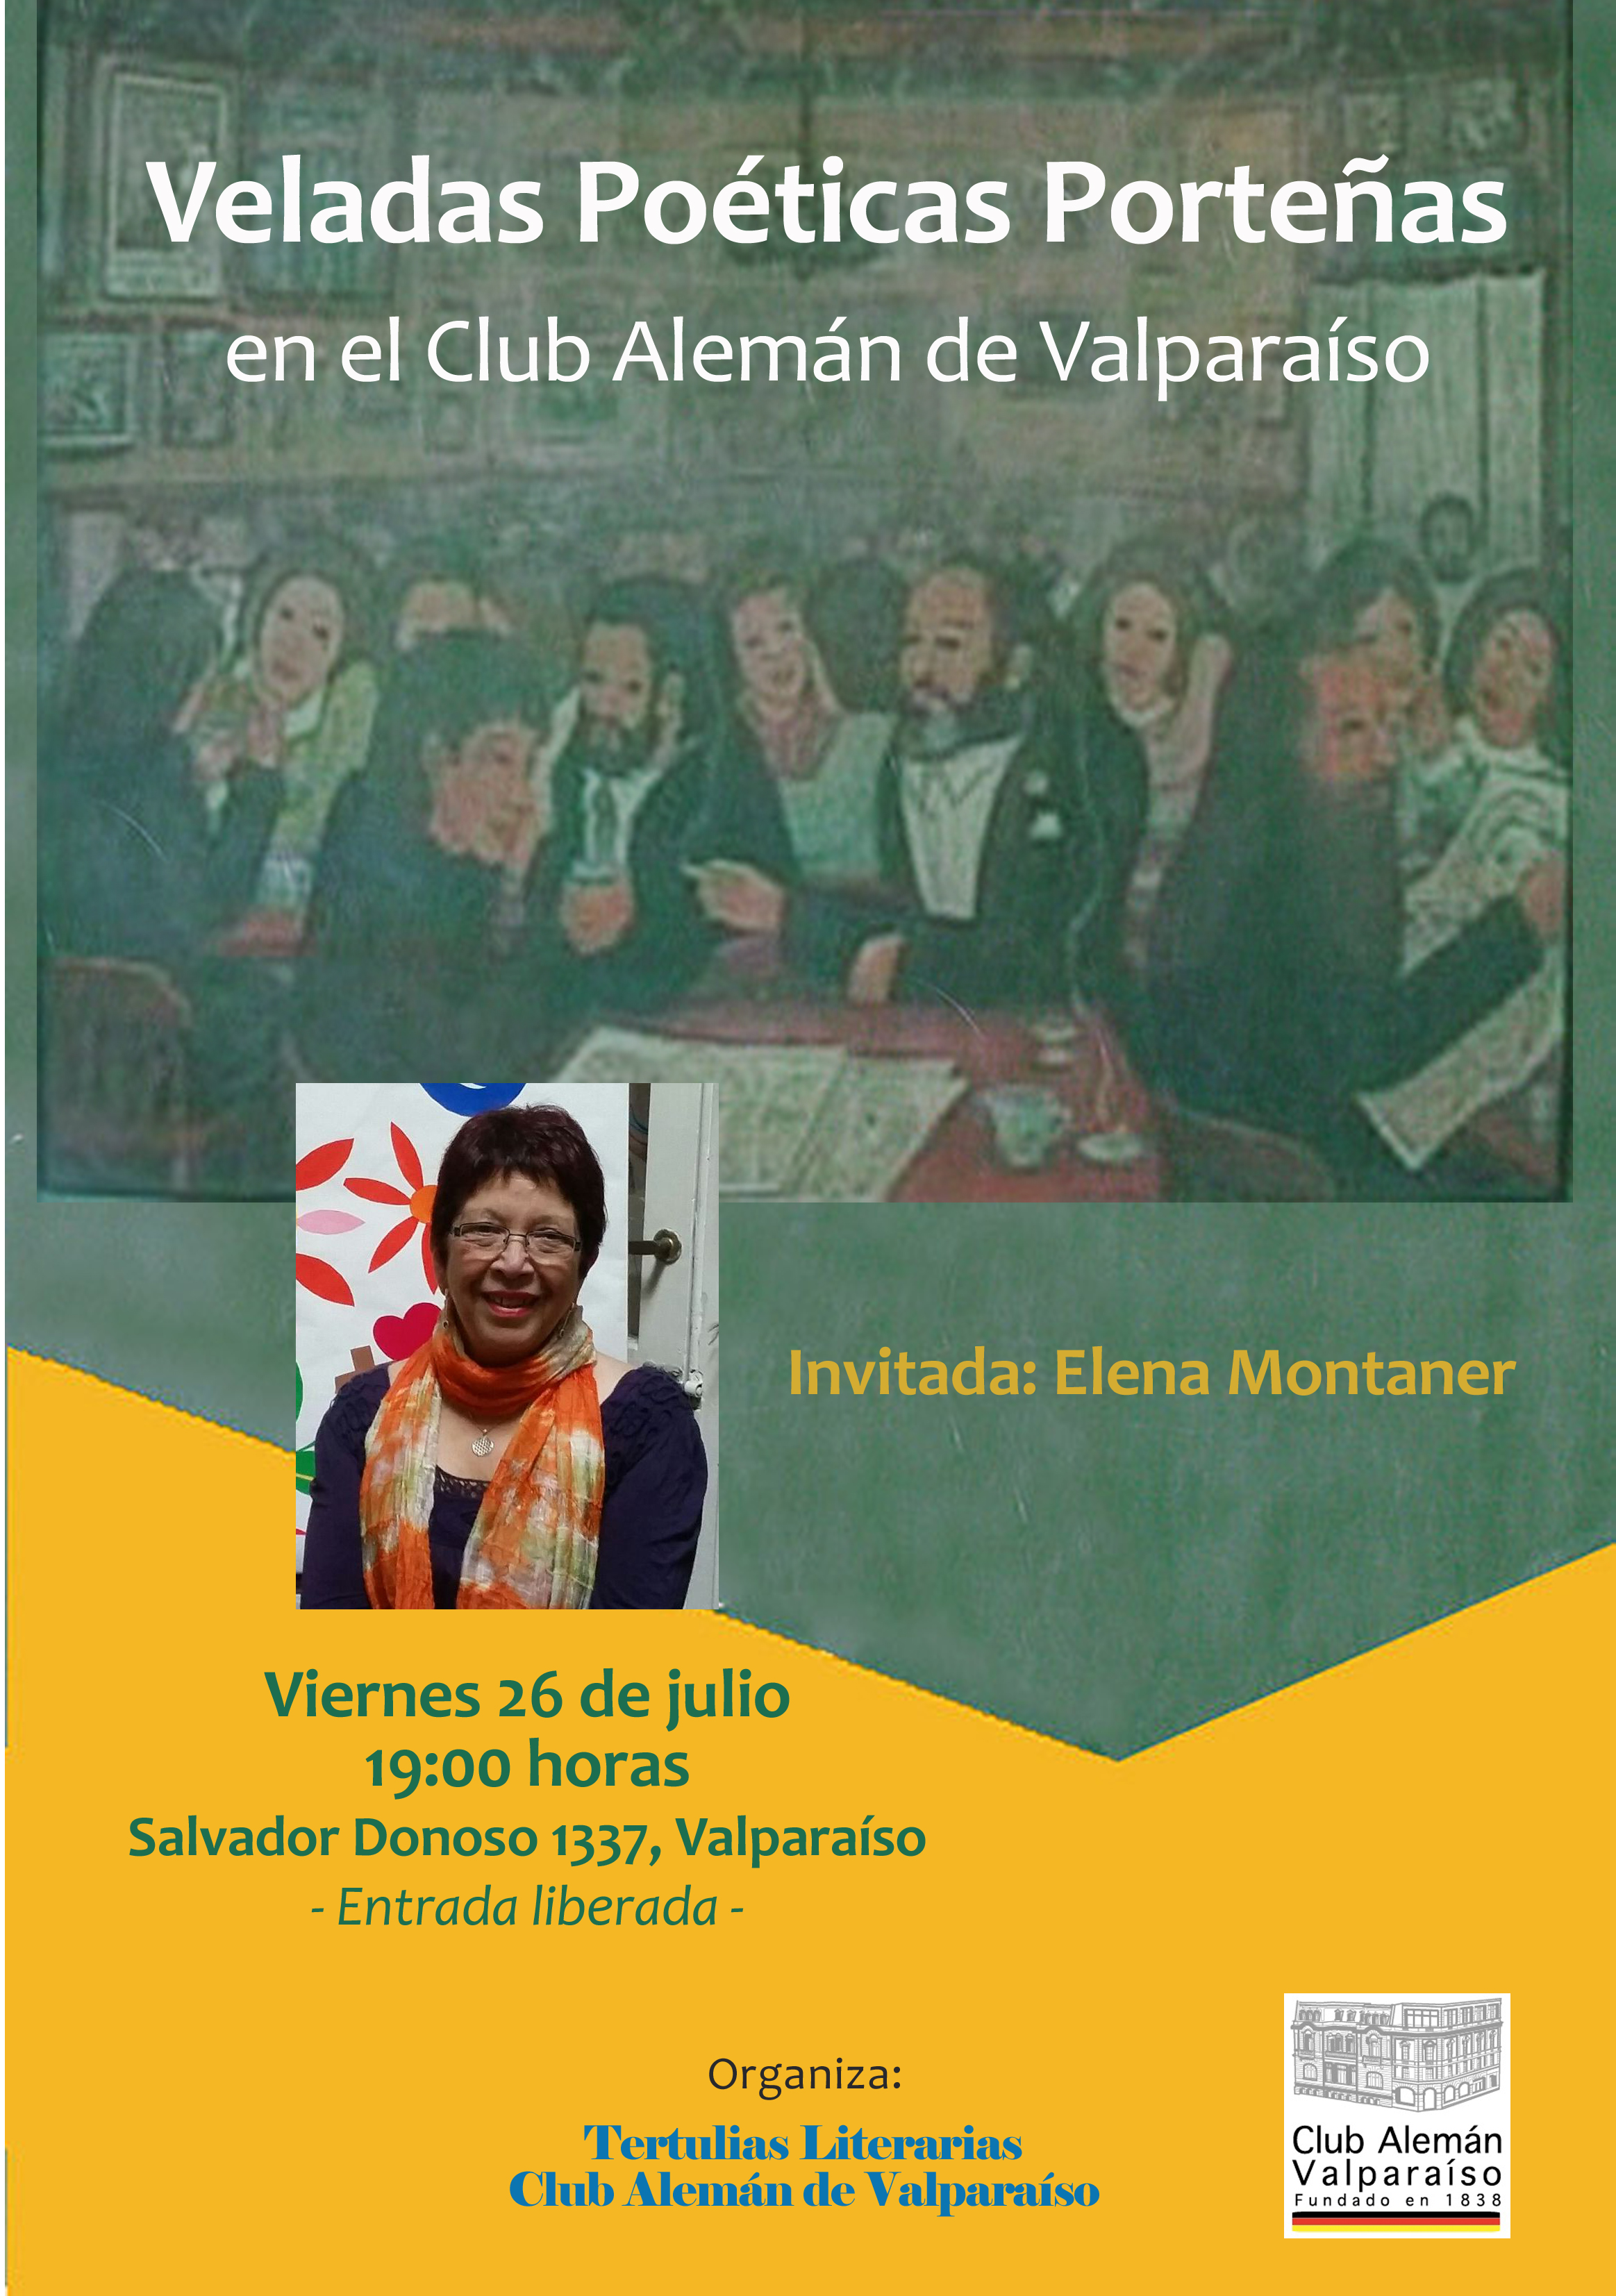 Veladas Poéticas Porteñas - Invitada: Elena Montaner